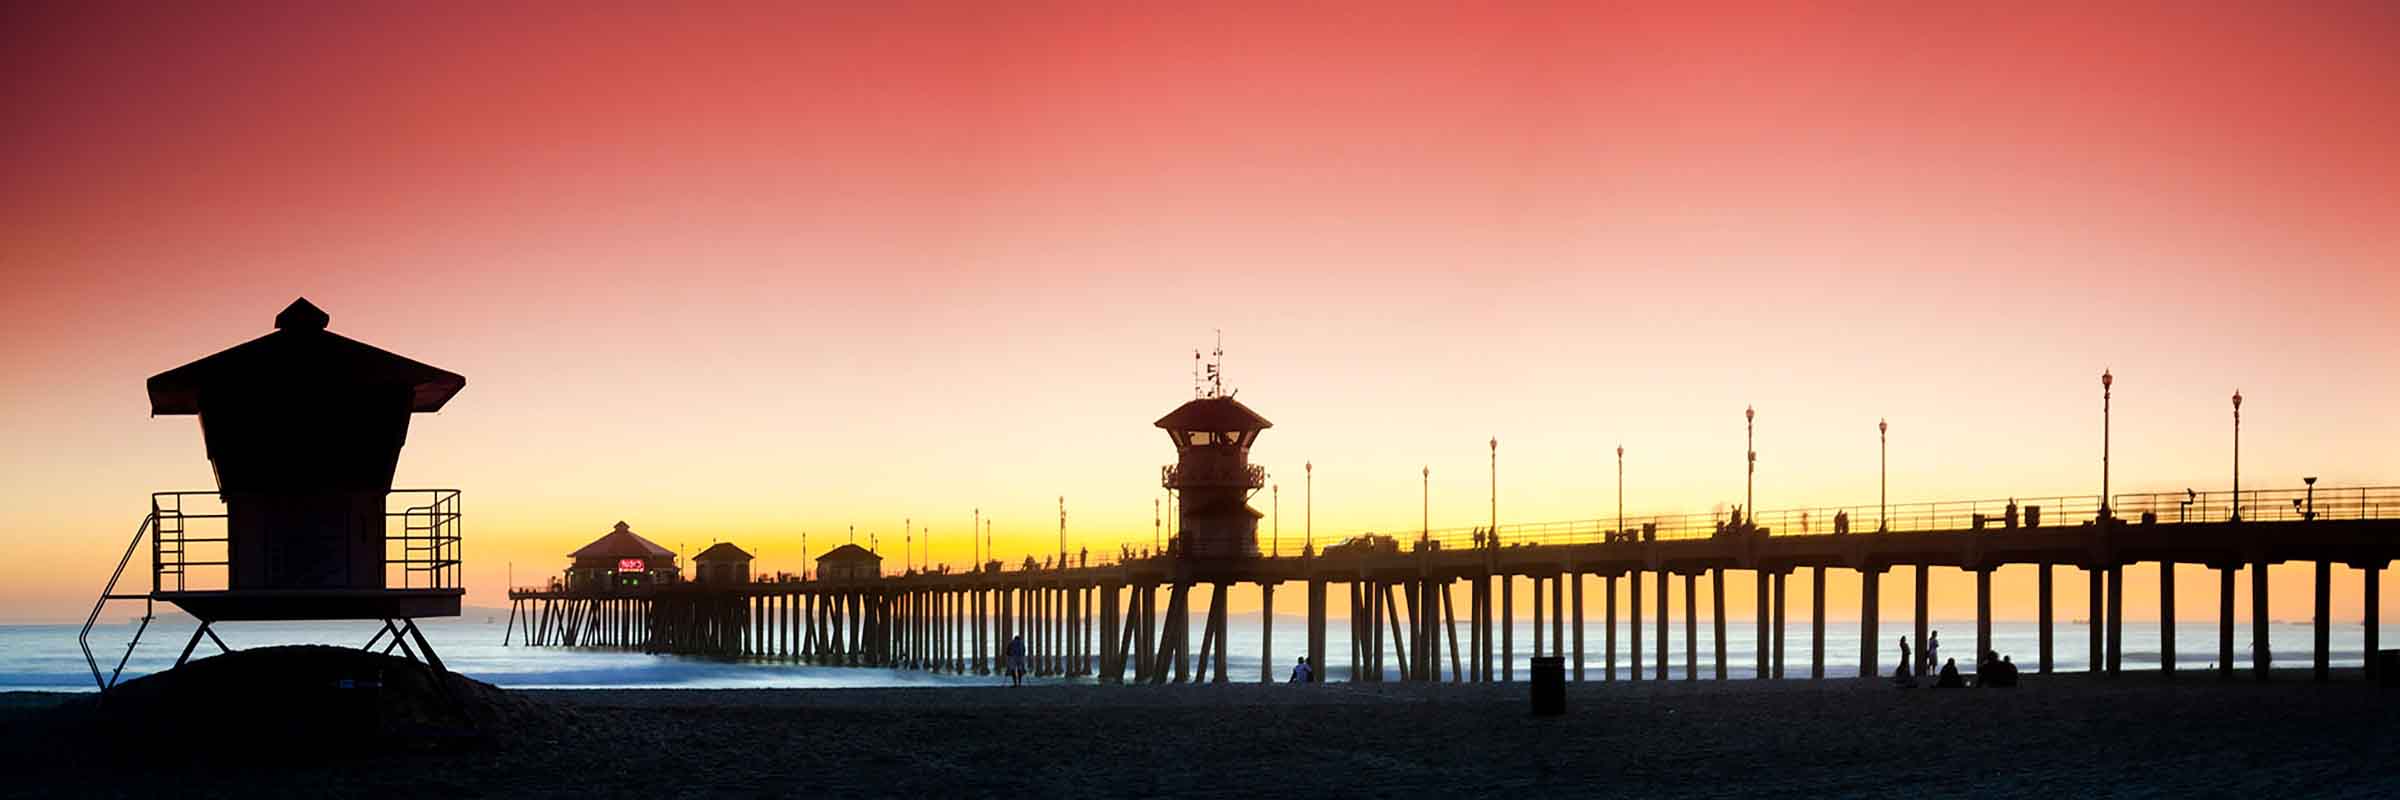 Huntington Beach Pier Silhouette – Sean Davey Photography